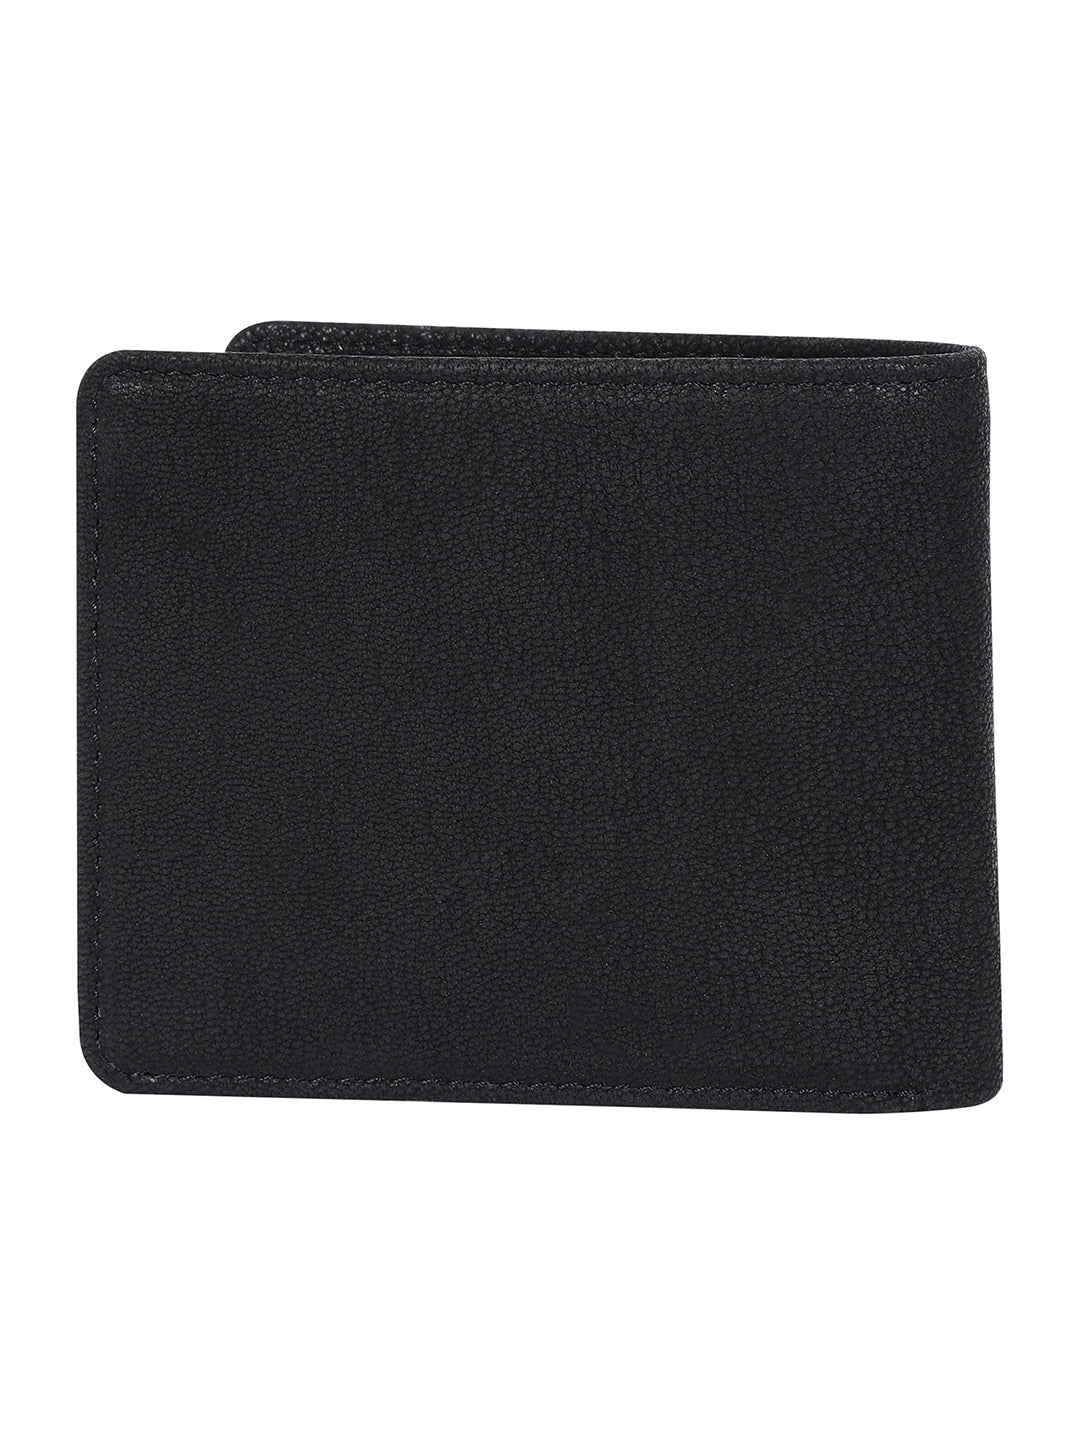 BAGATT Black Leather Men's Wallet